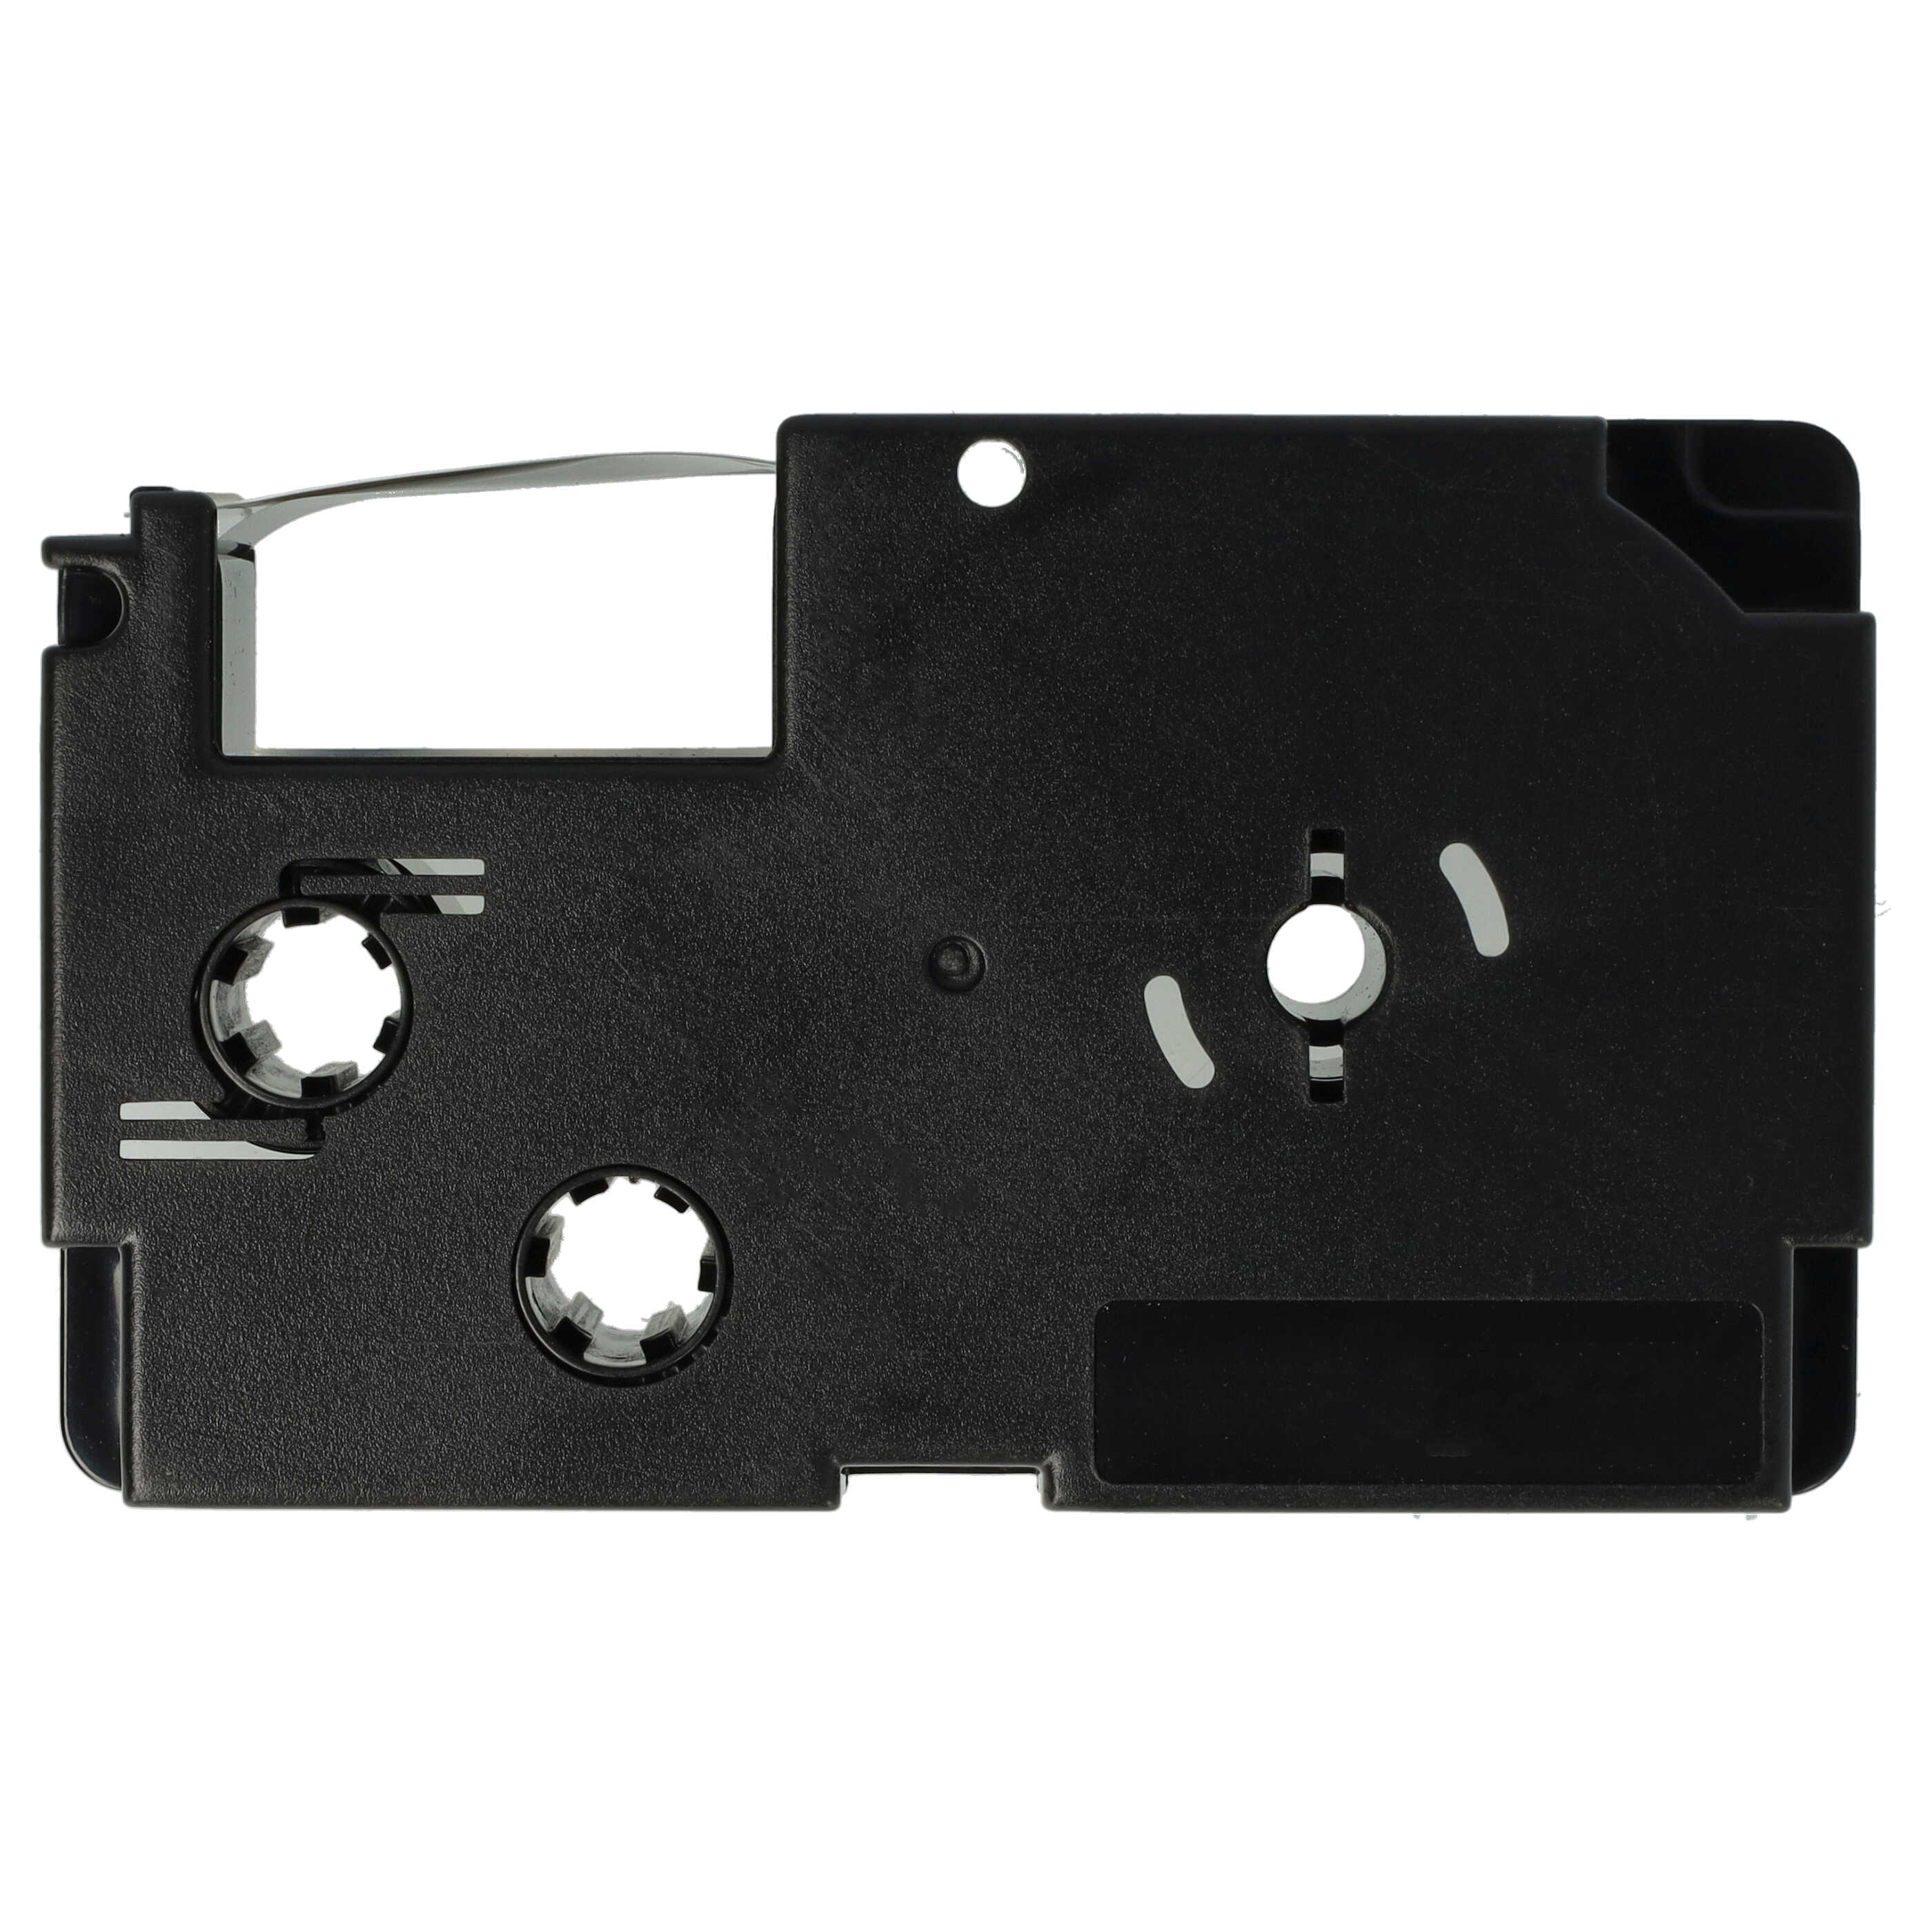 5x Cassetta nastro sostituisce Casio XR-18WE1, XR-18WE per etichettatrice Casio 18mm nero su bianco